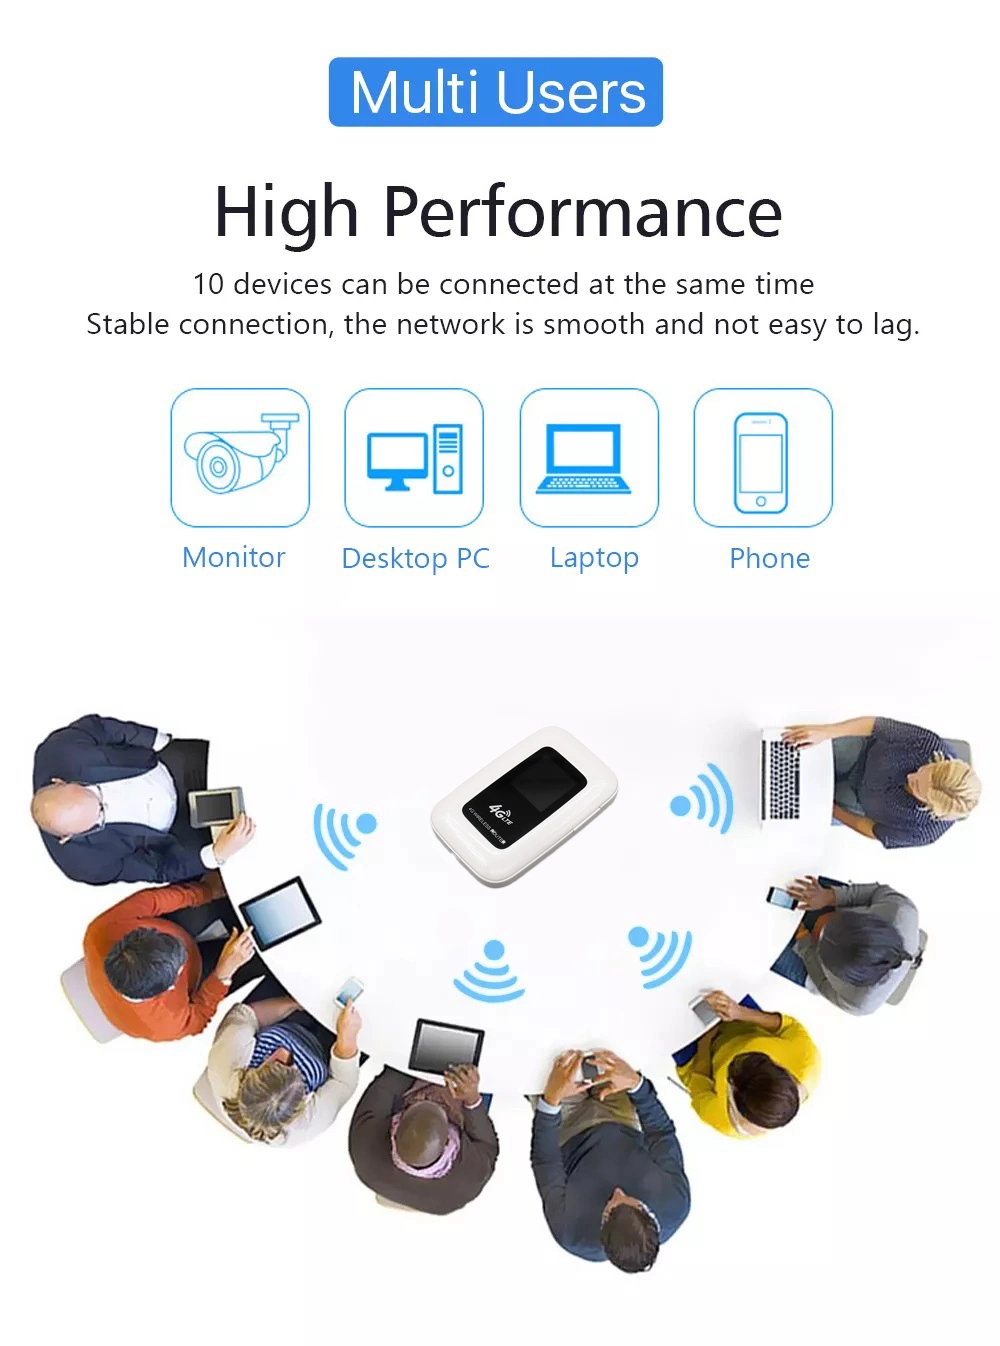 Hot Sale Sunhans Small Size Pocket 3G 4G LTE Wireless Hotspot Modem Mifi Portable WiFi Router with 2100mAh Battery